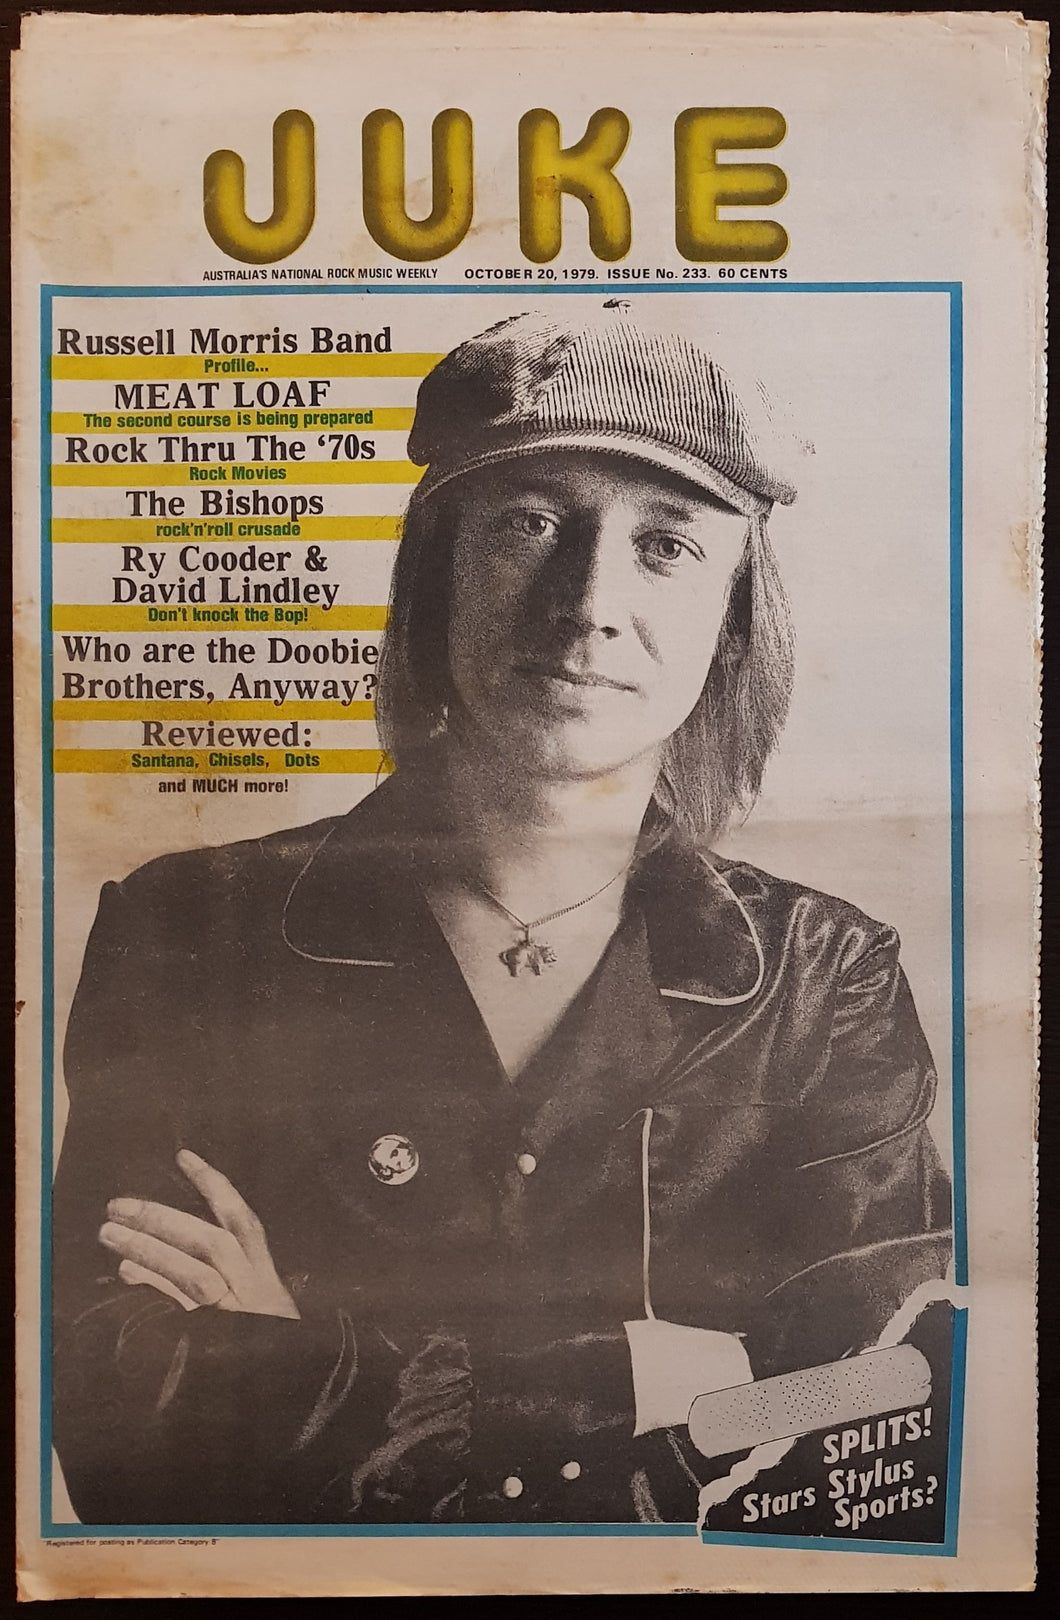 Morris, Russell - Juke October 20, 1979. Issue No.233